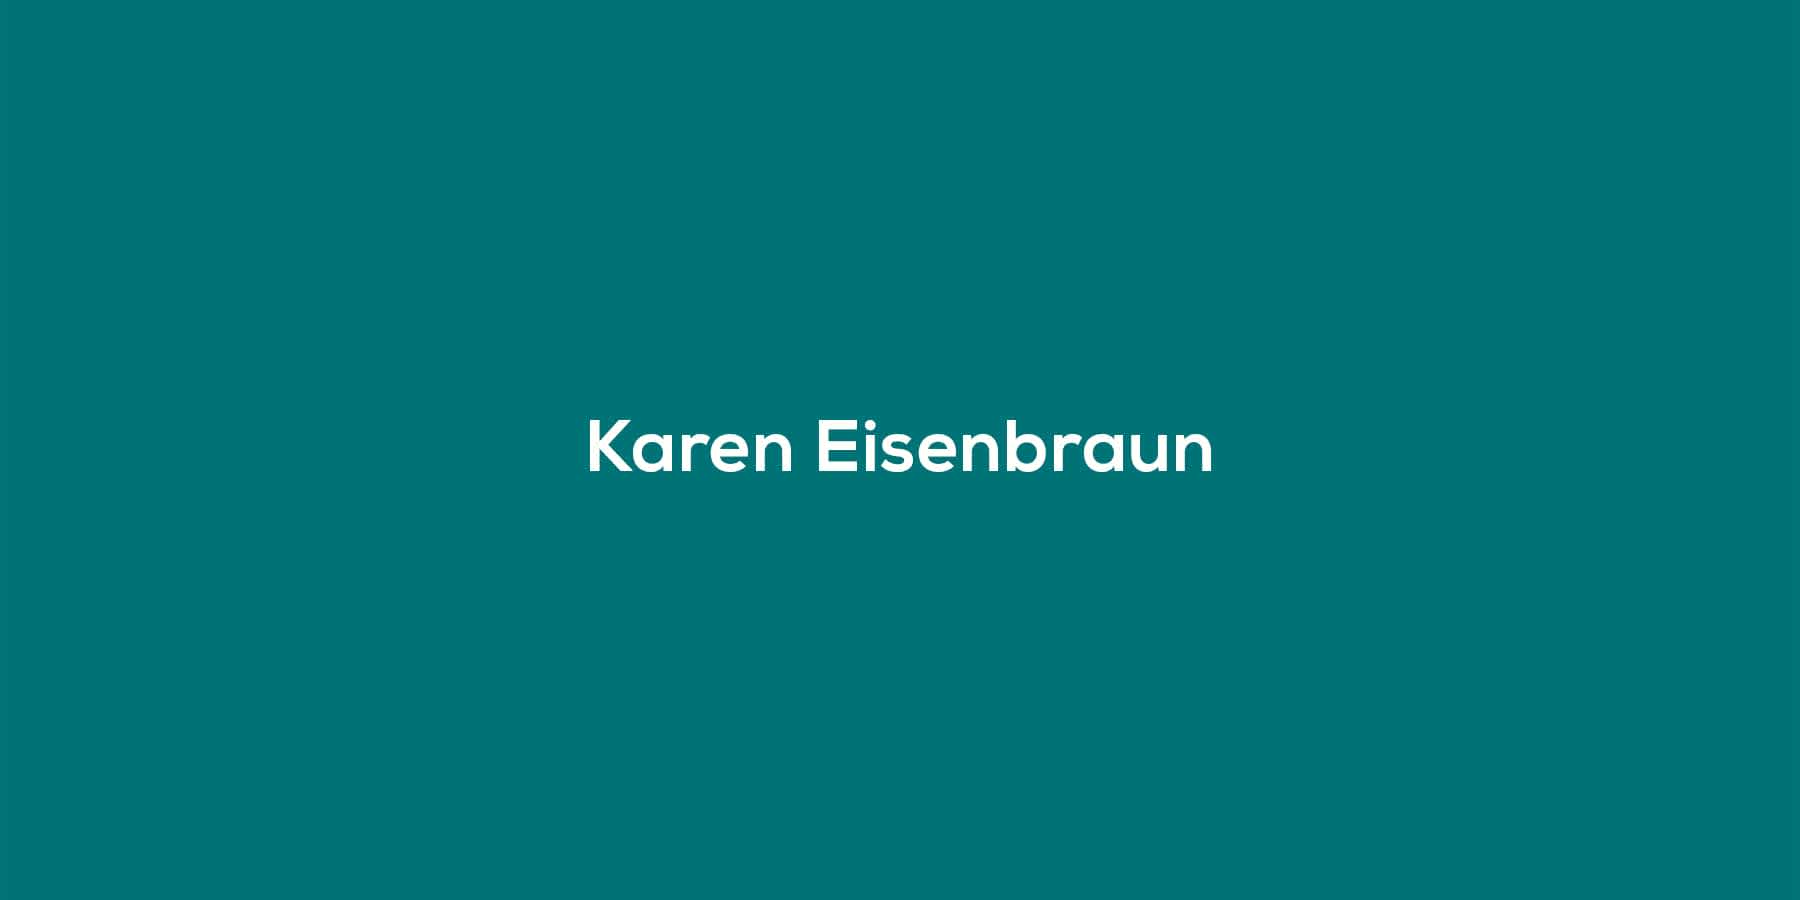 Name of Karen Eisenbraun on a teal background